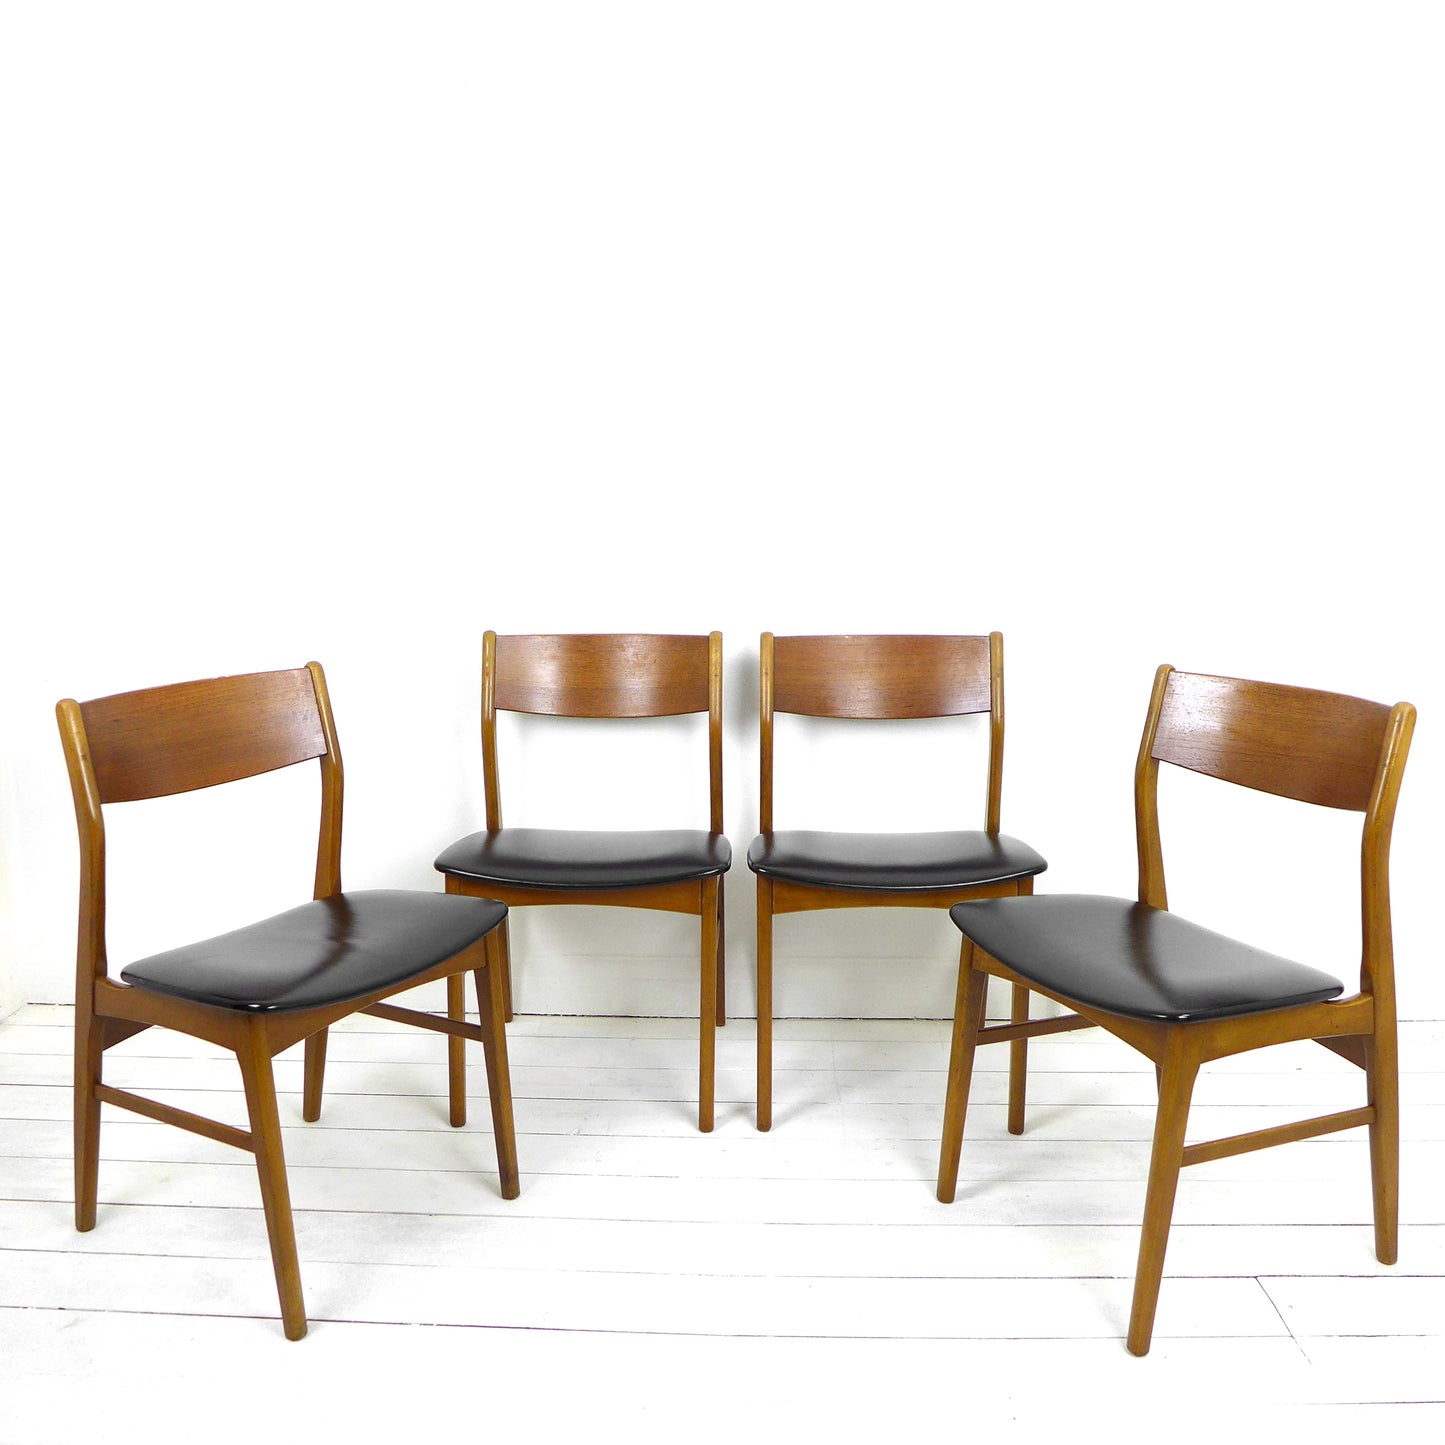 Set 4 Mid Century Dining Chairs in Black Vinyl